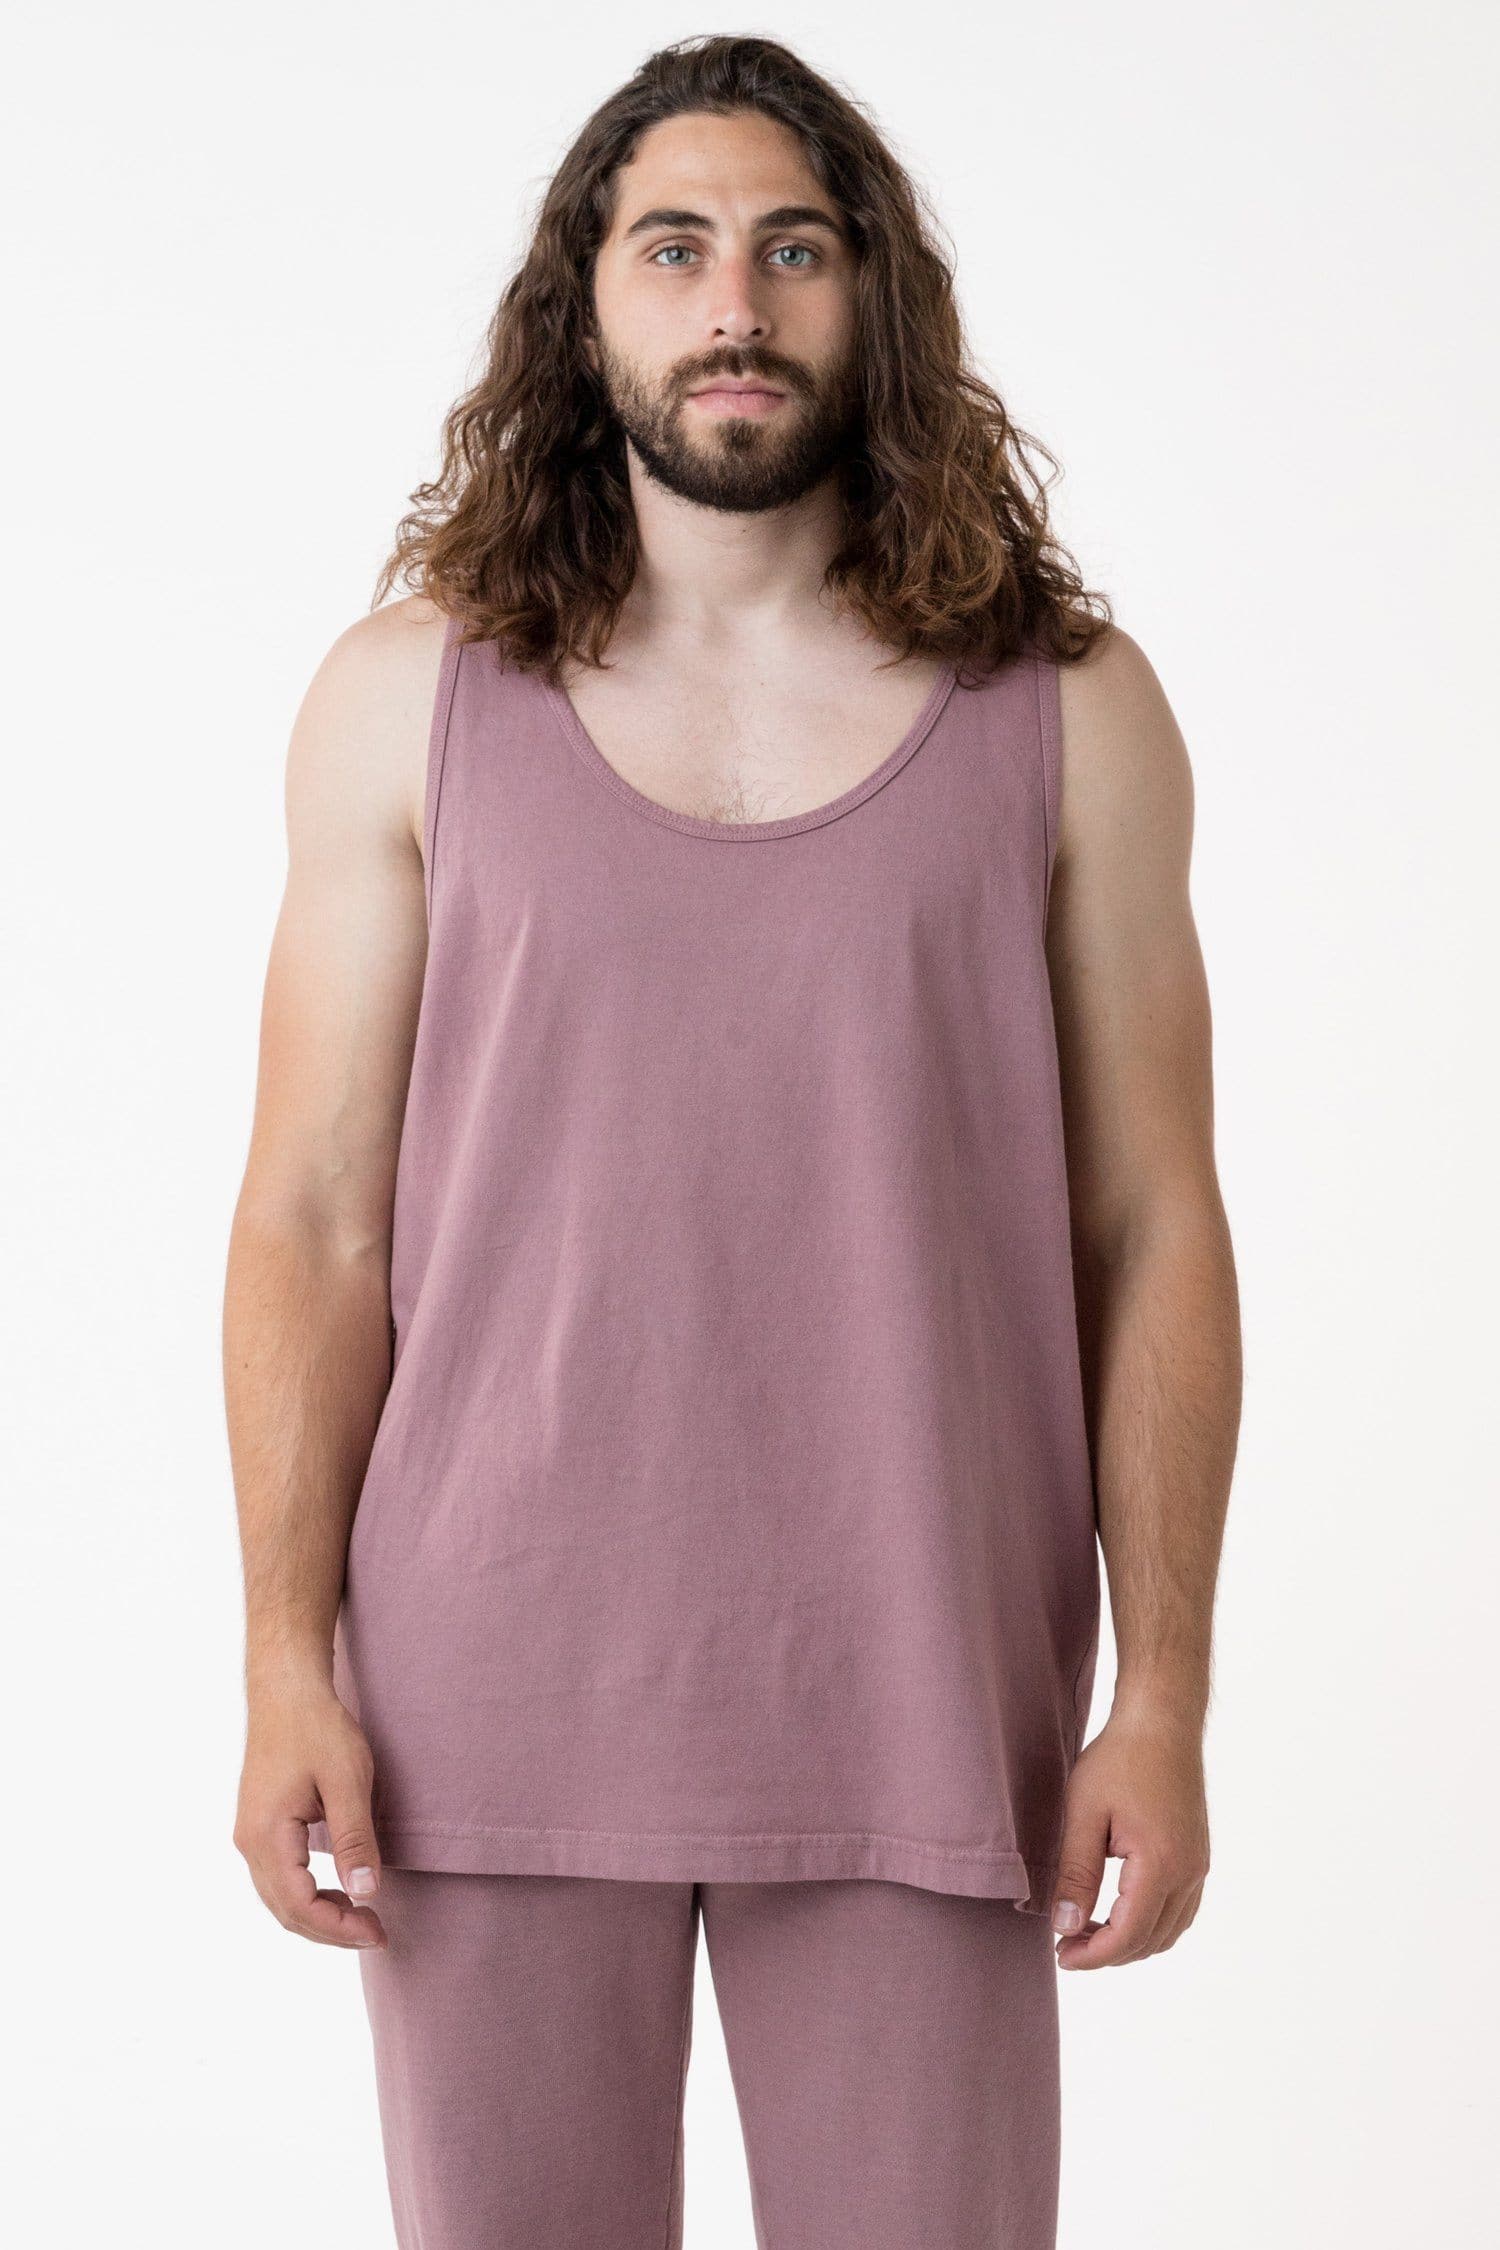 GWAABD Young La Tank Tops Men Casual Spring Summer Sleeveless Printed O  Neck Shirt Tank Tops Blouse 